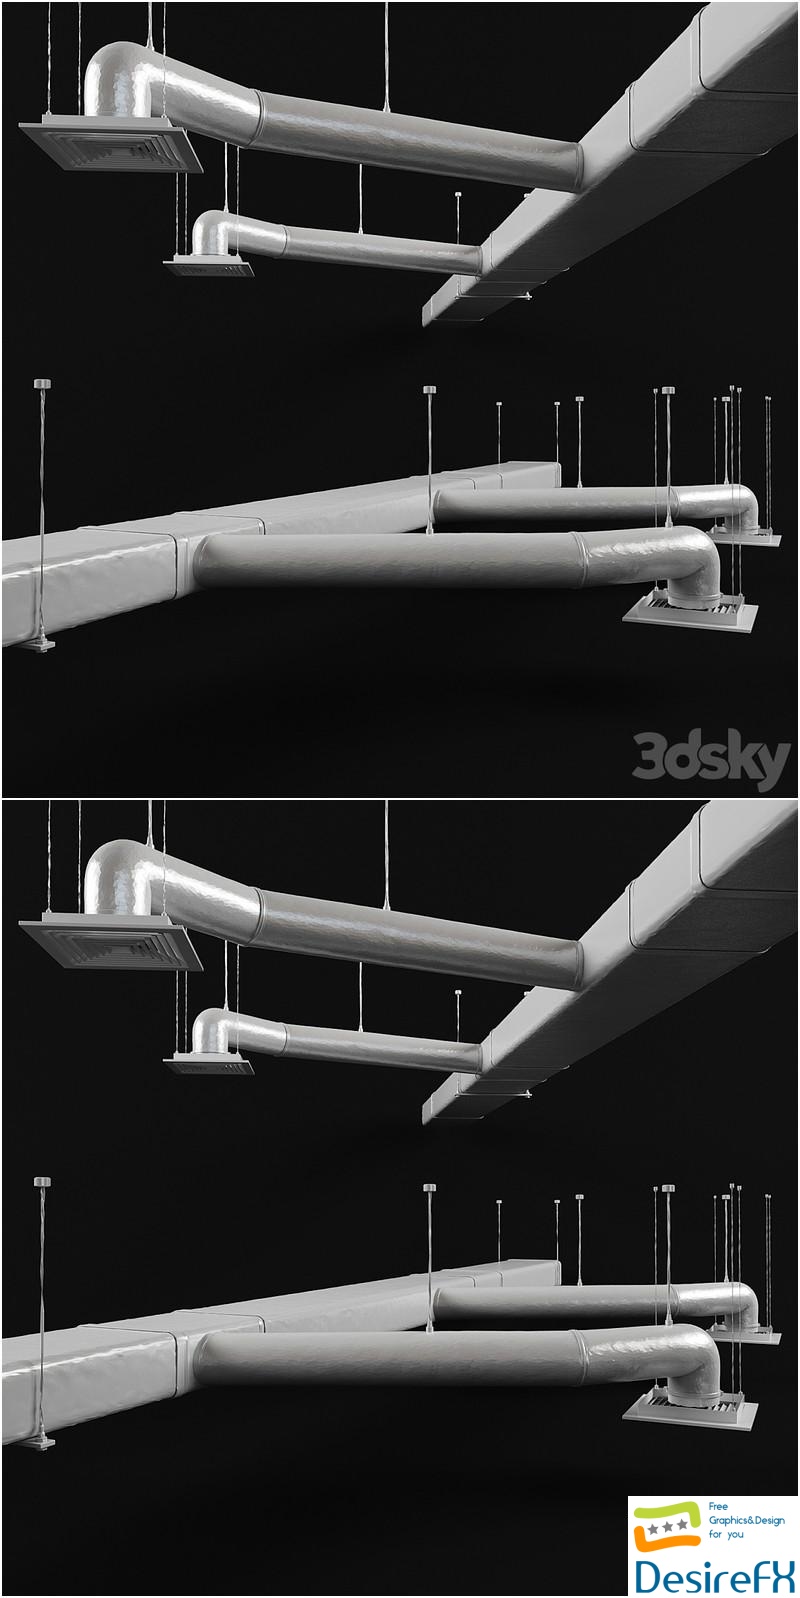 Airbox 3D Model